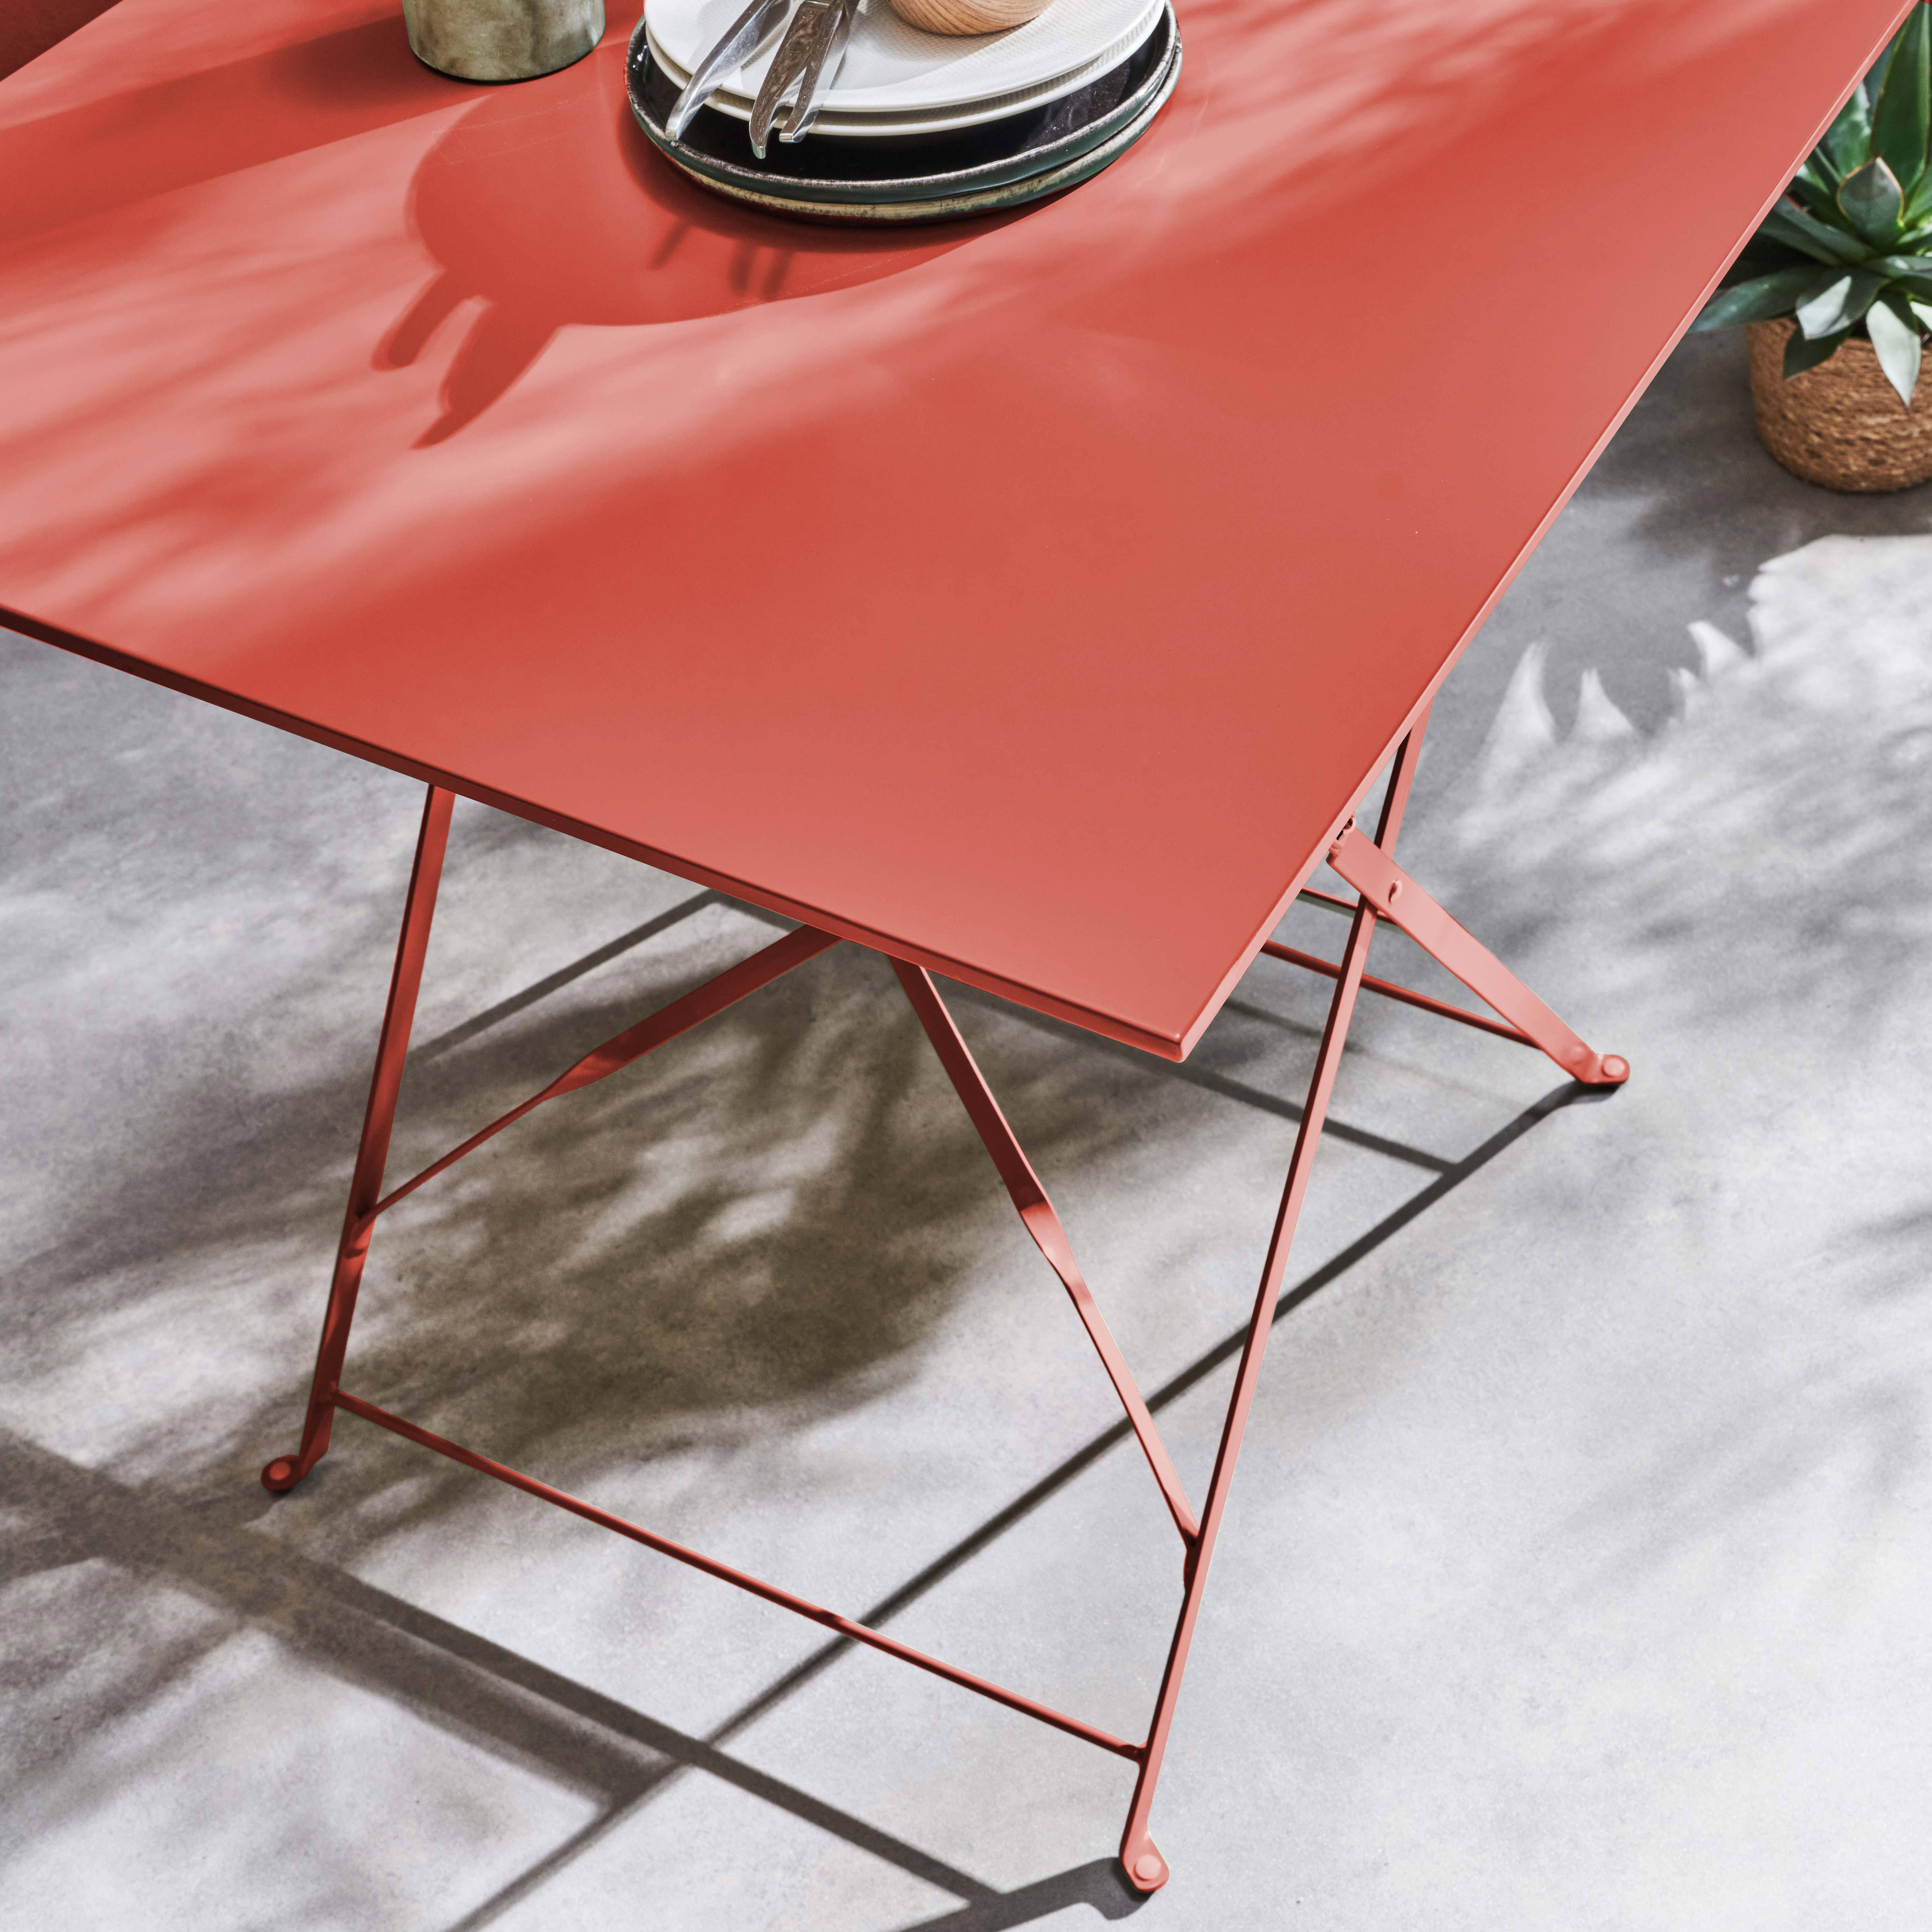 Emilia - Tuintafel bistrot opvouwbaar - Vierkante tafel 70x70cm van staal met thermolak - Terra Cotta  Photo2